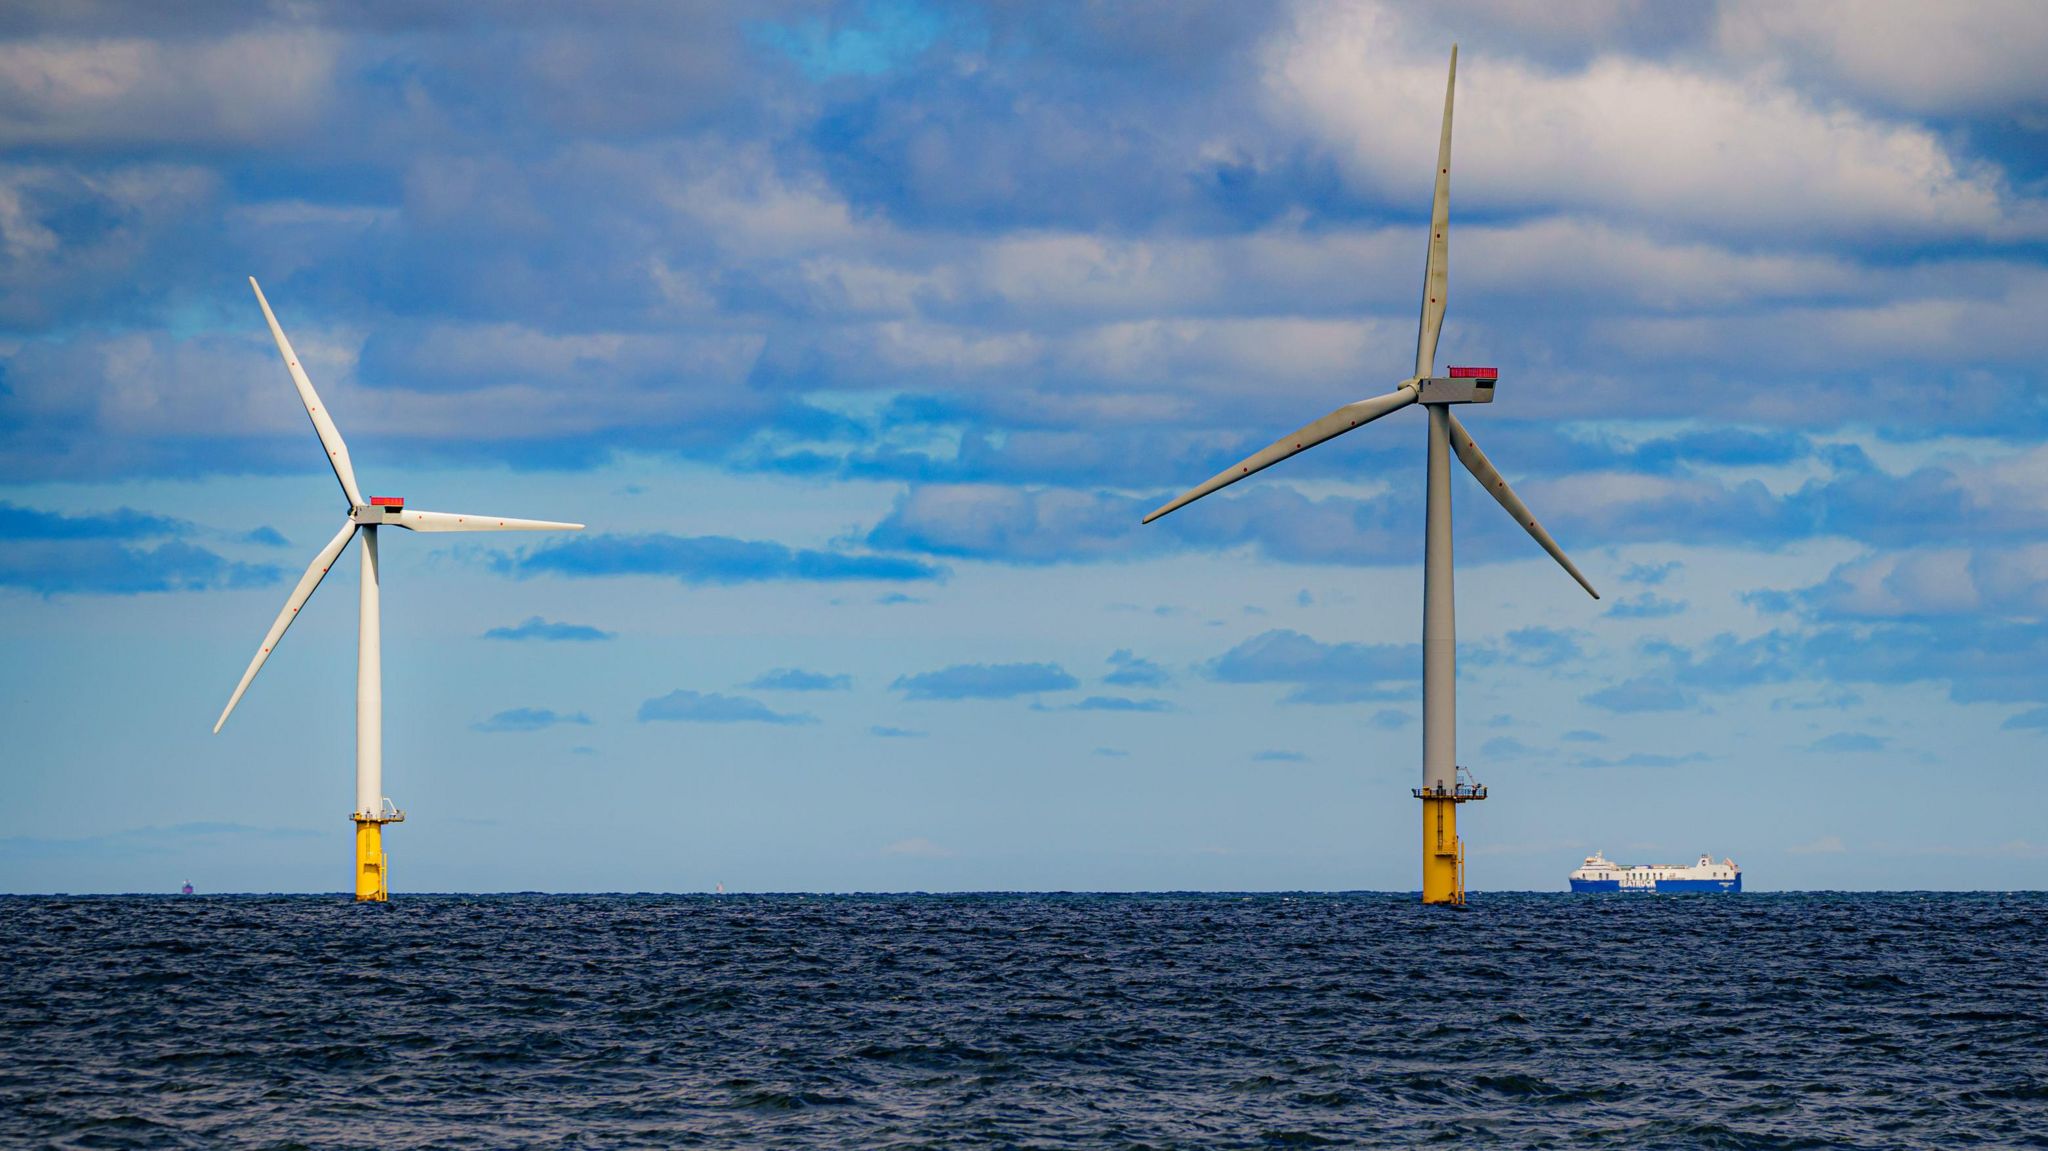 Guernsey offshore wind farm needs 100 turbines, energy boss